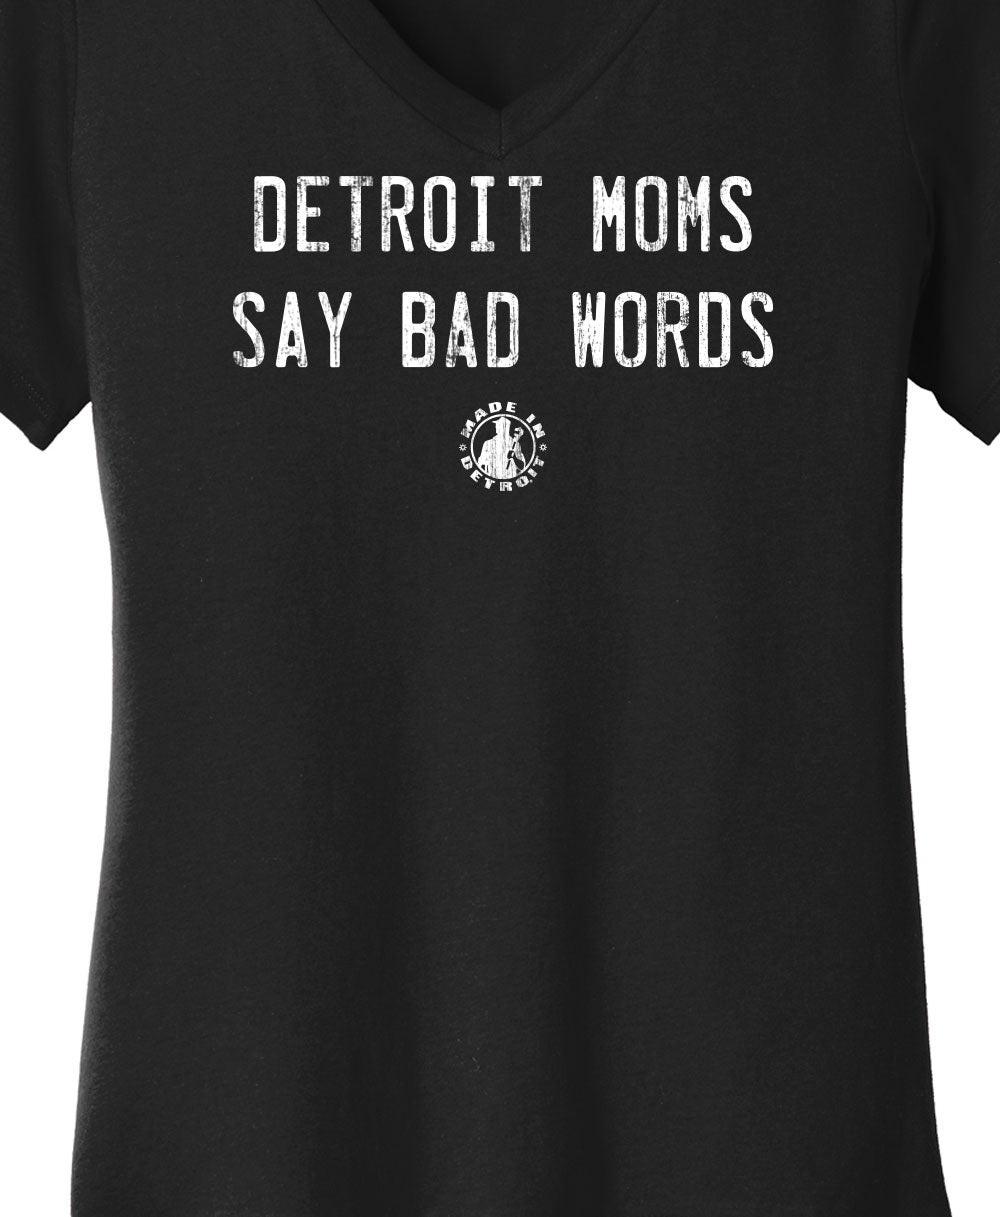 Detroit Moms Cotton V-Neck